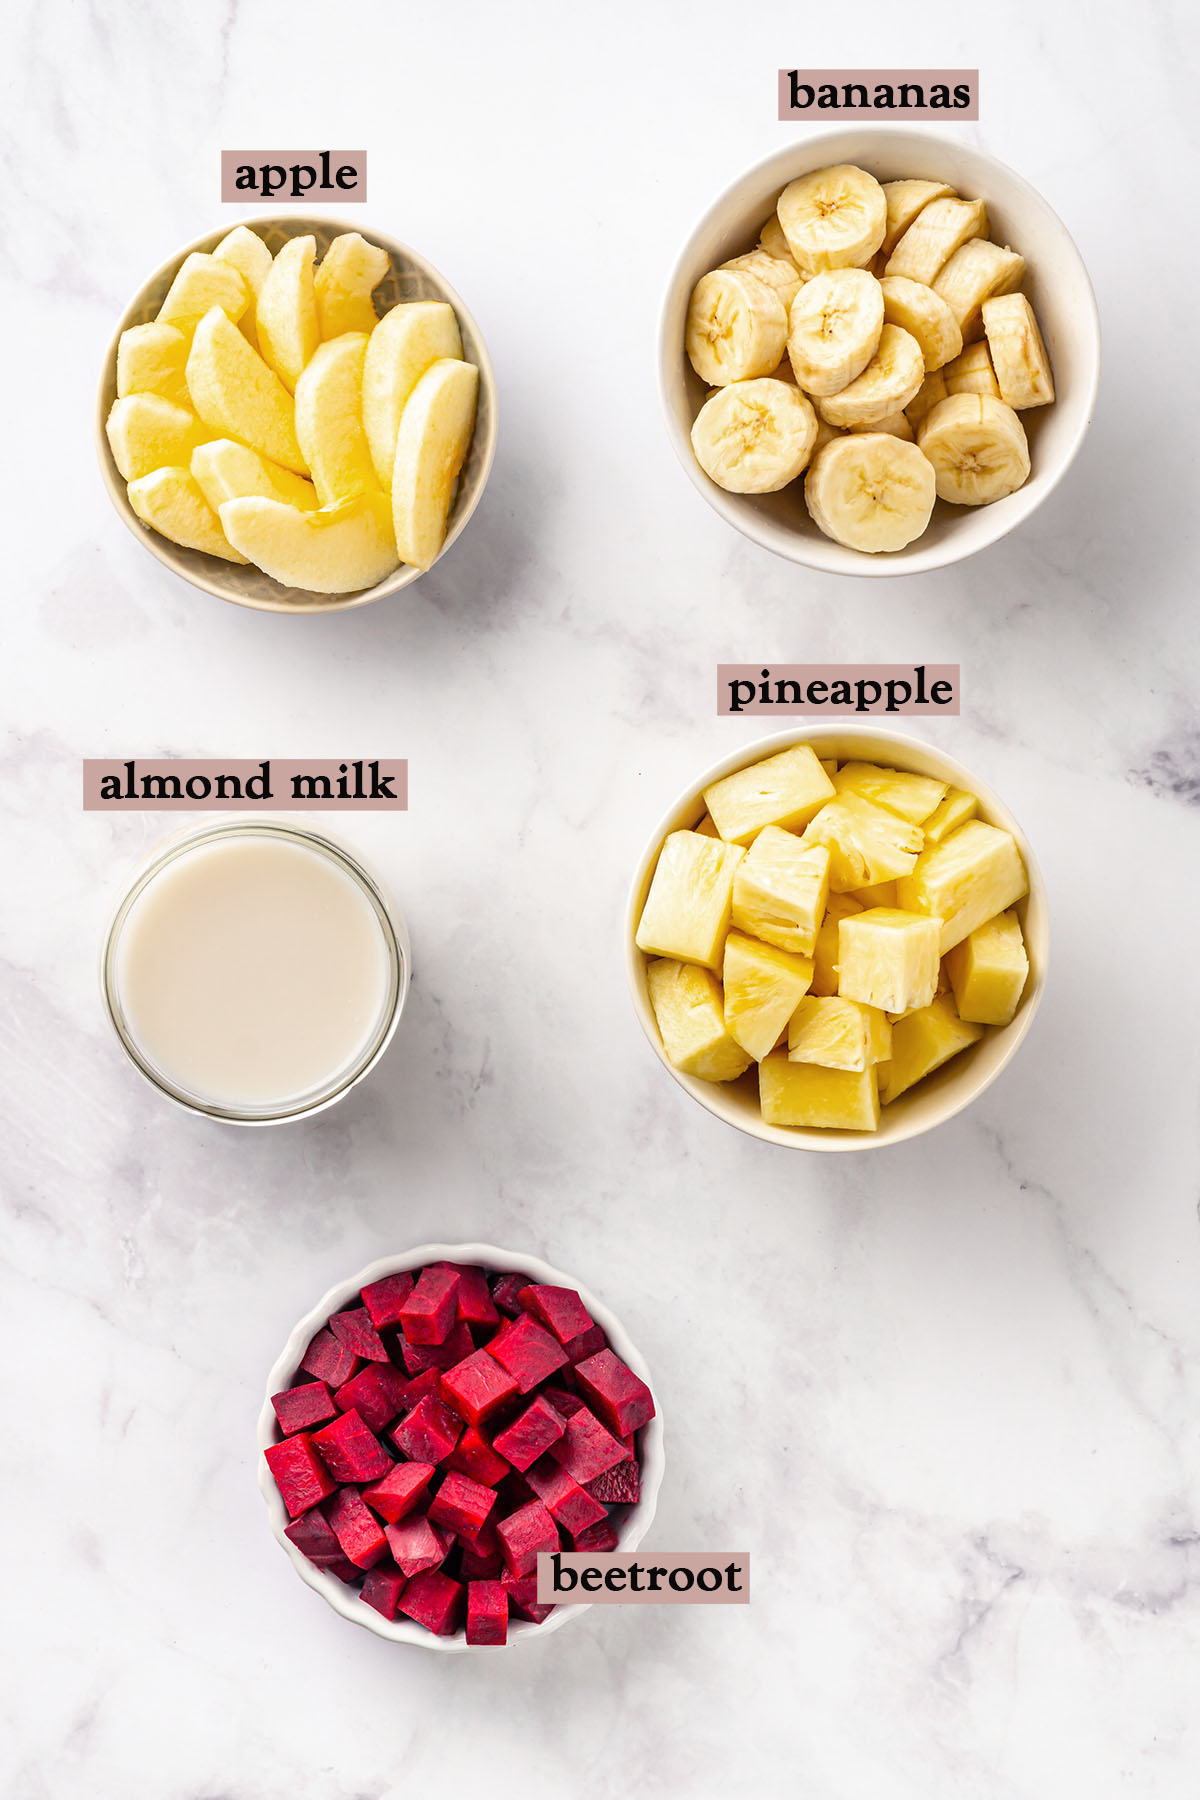 Ingredients for beet pineapple smoothie